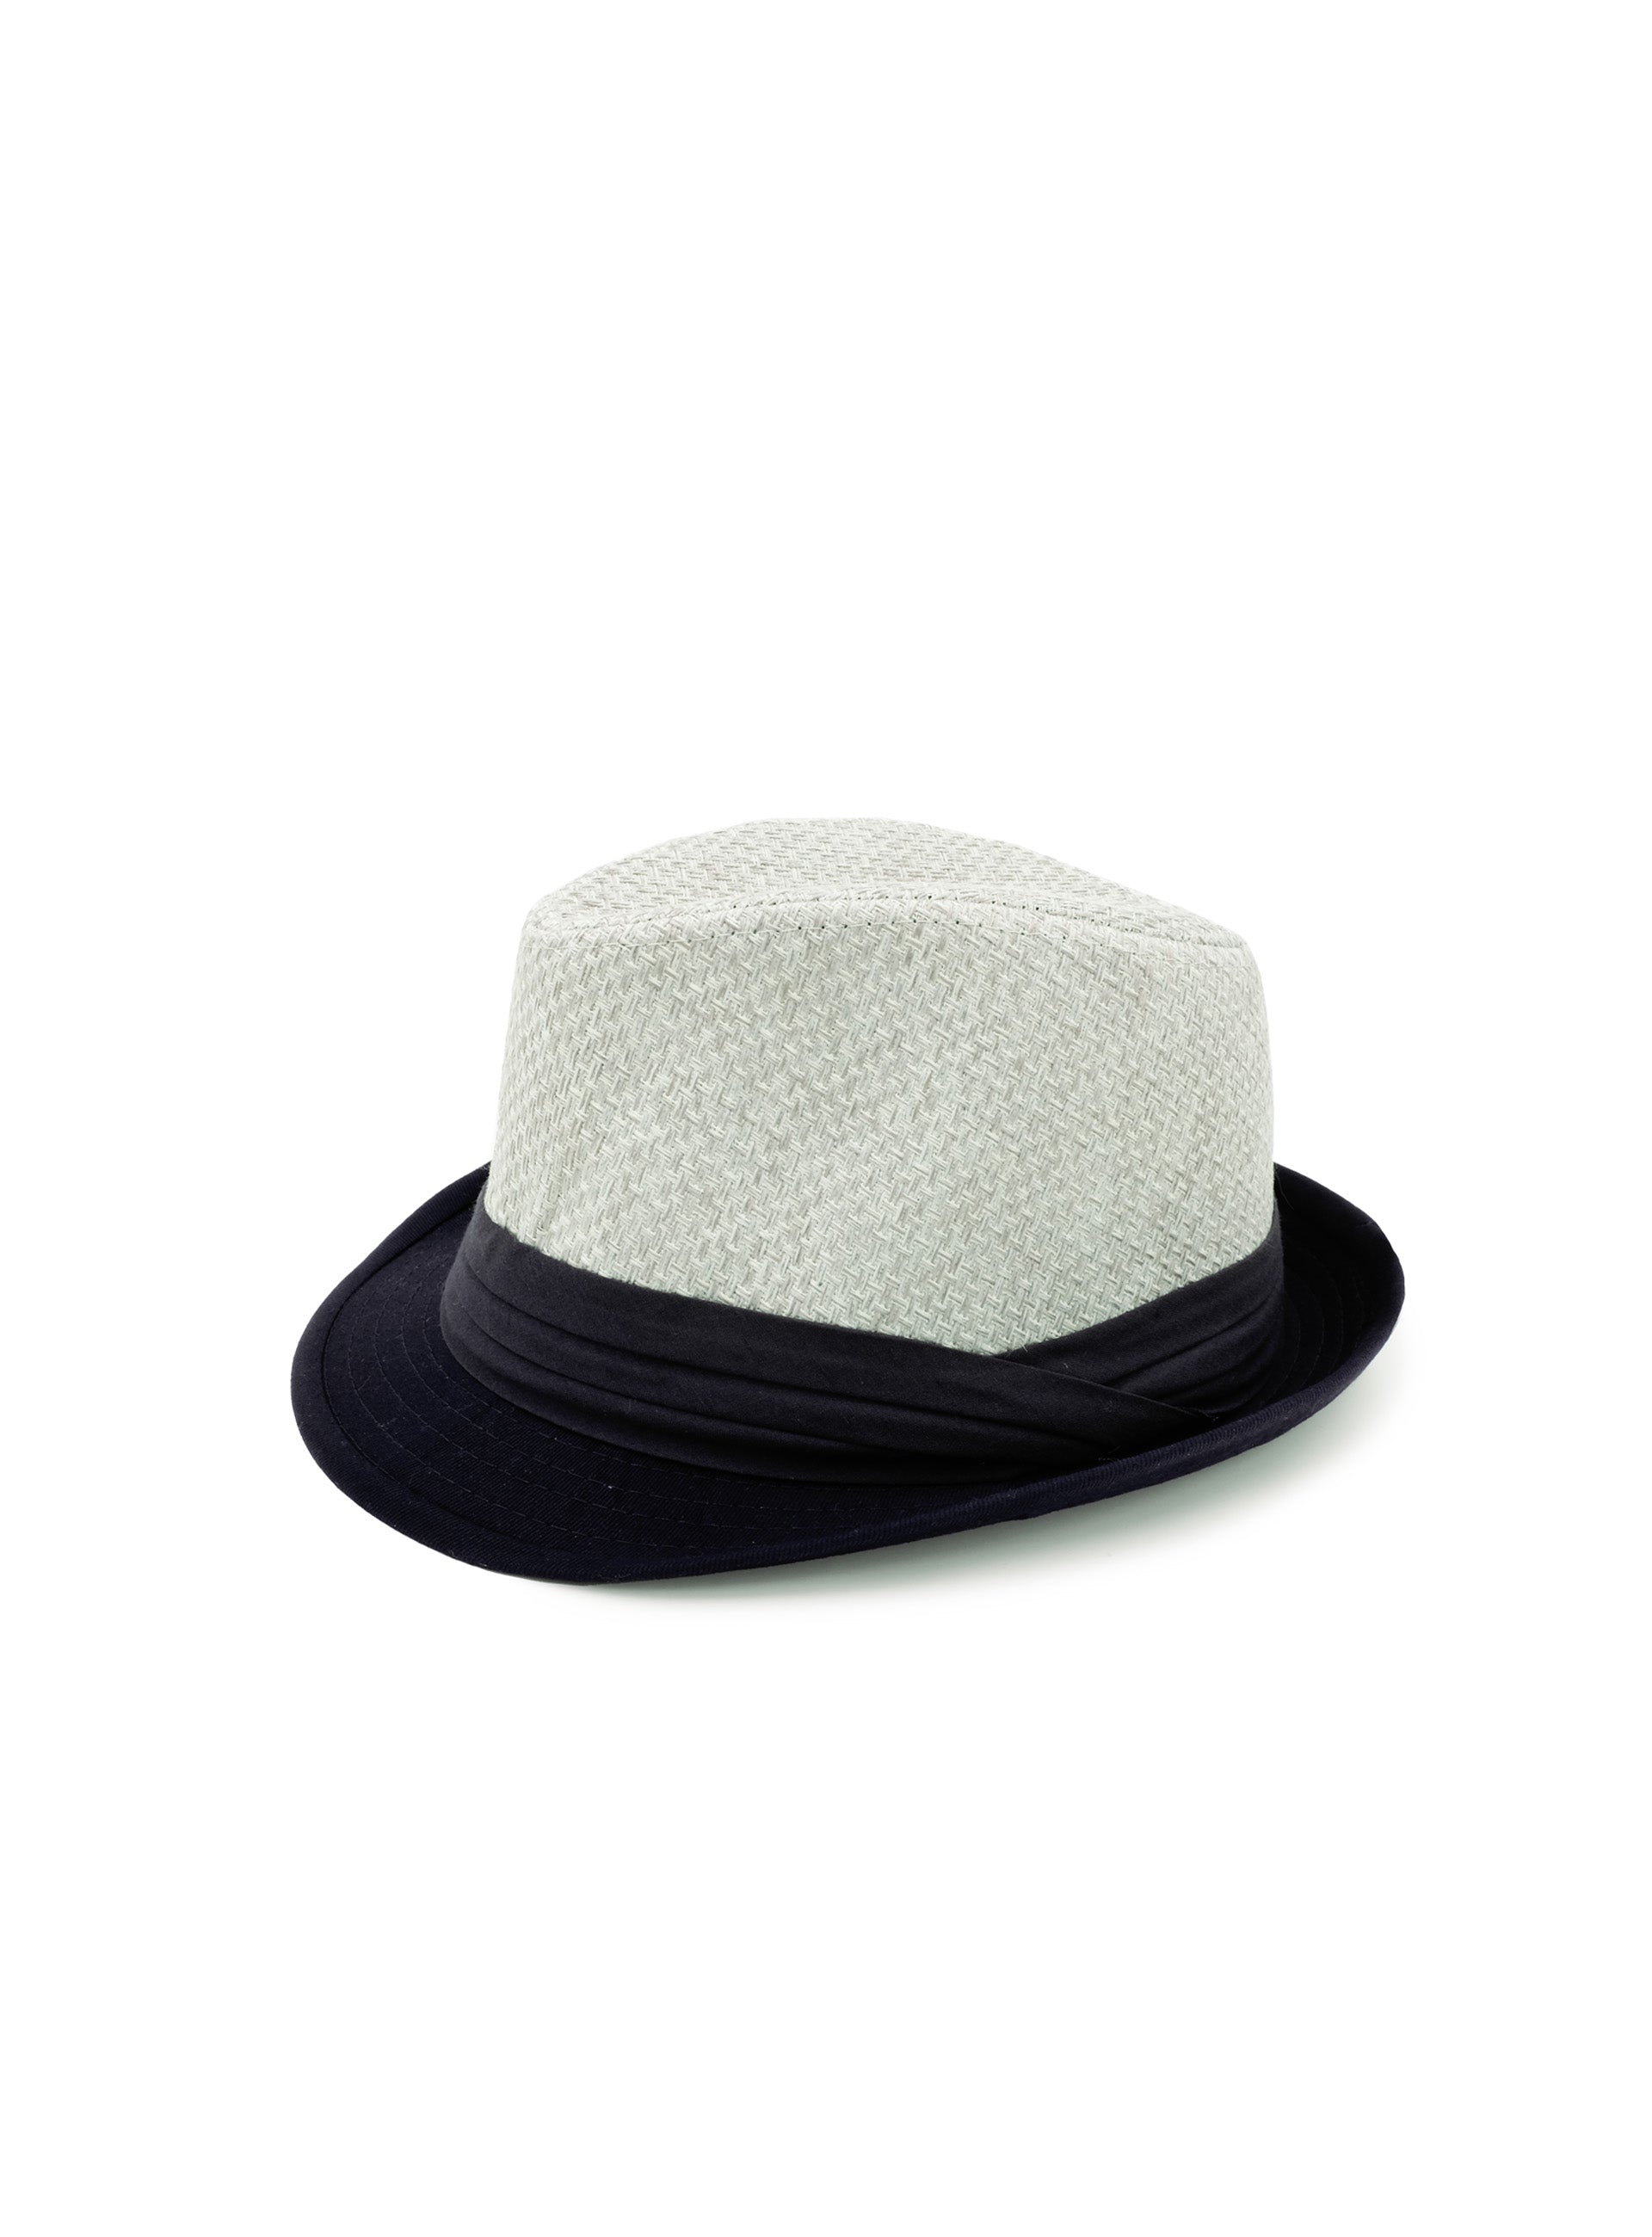 smoke gray woven fedora hat with black band